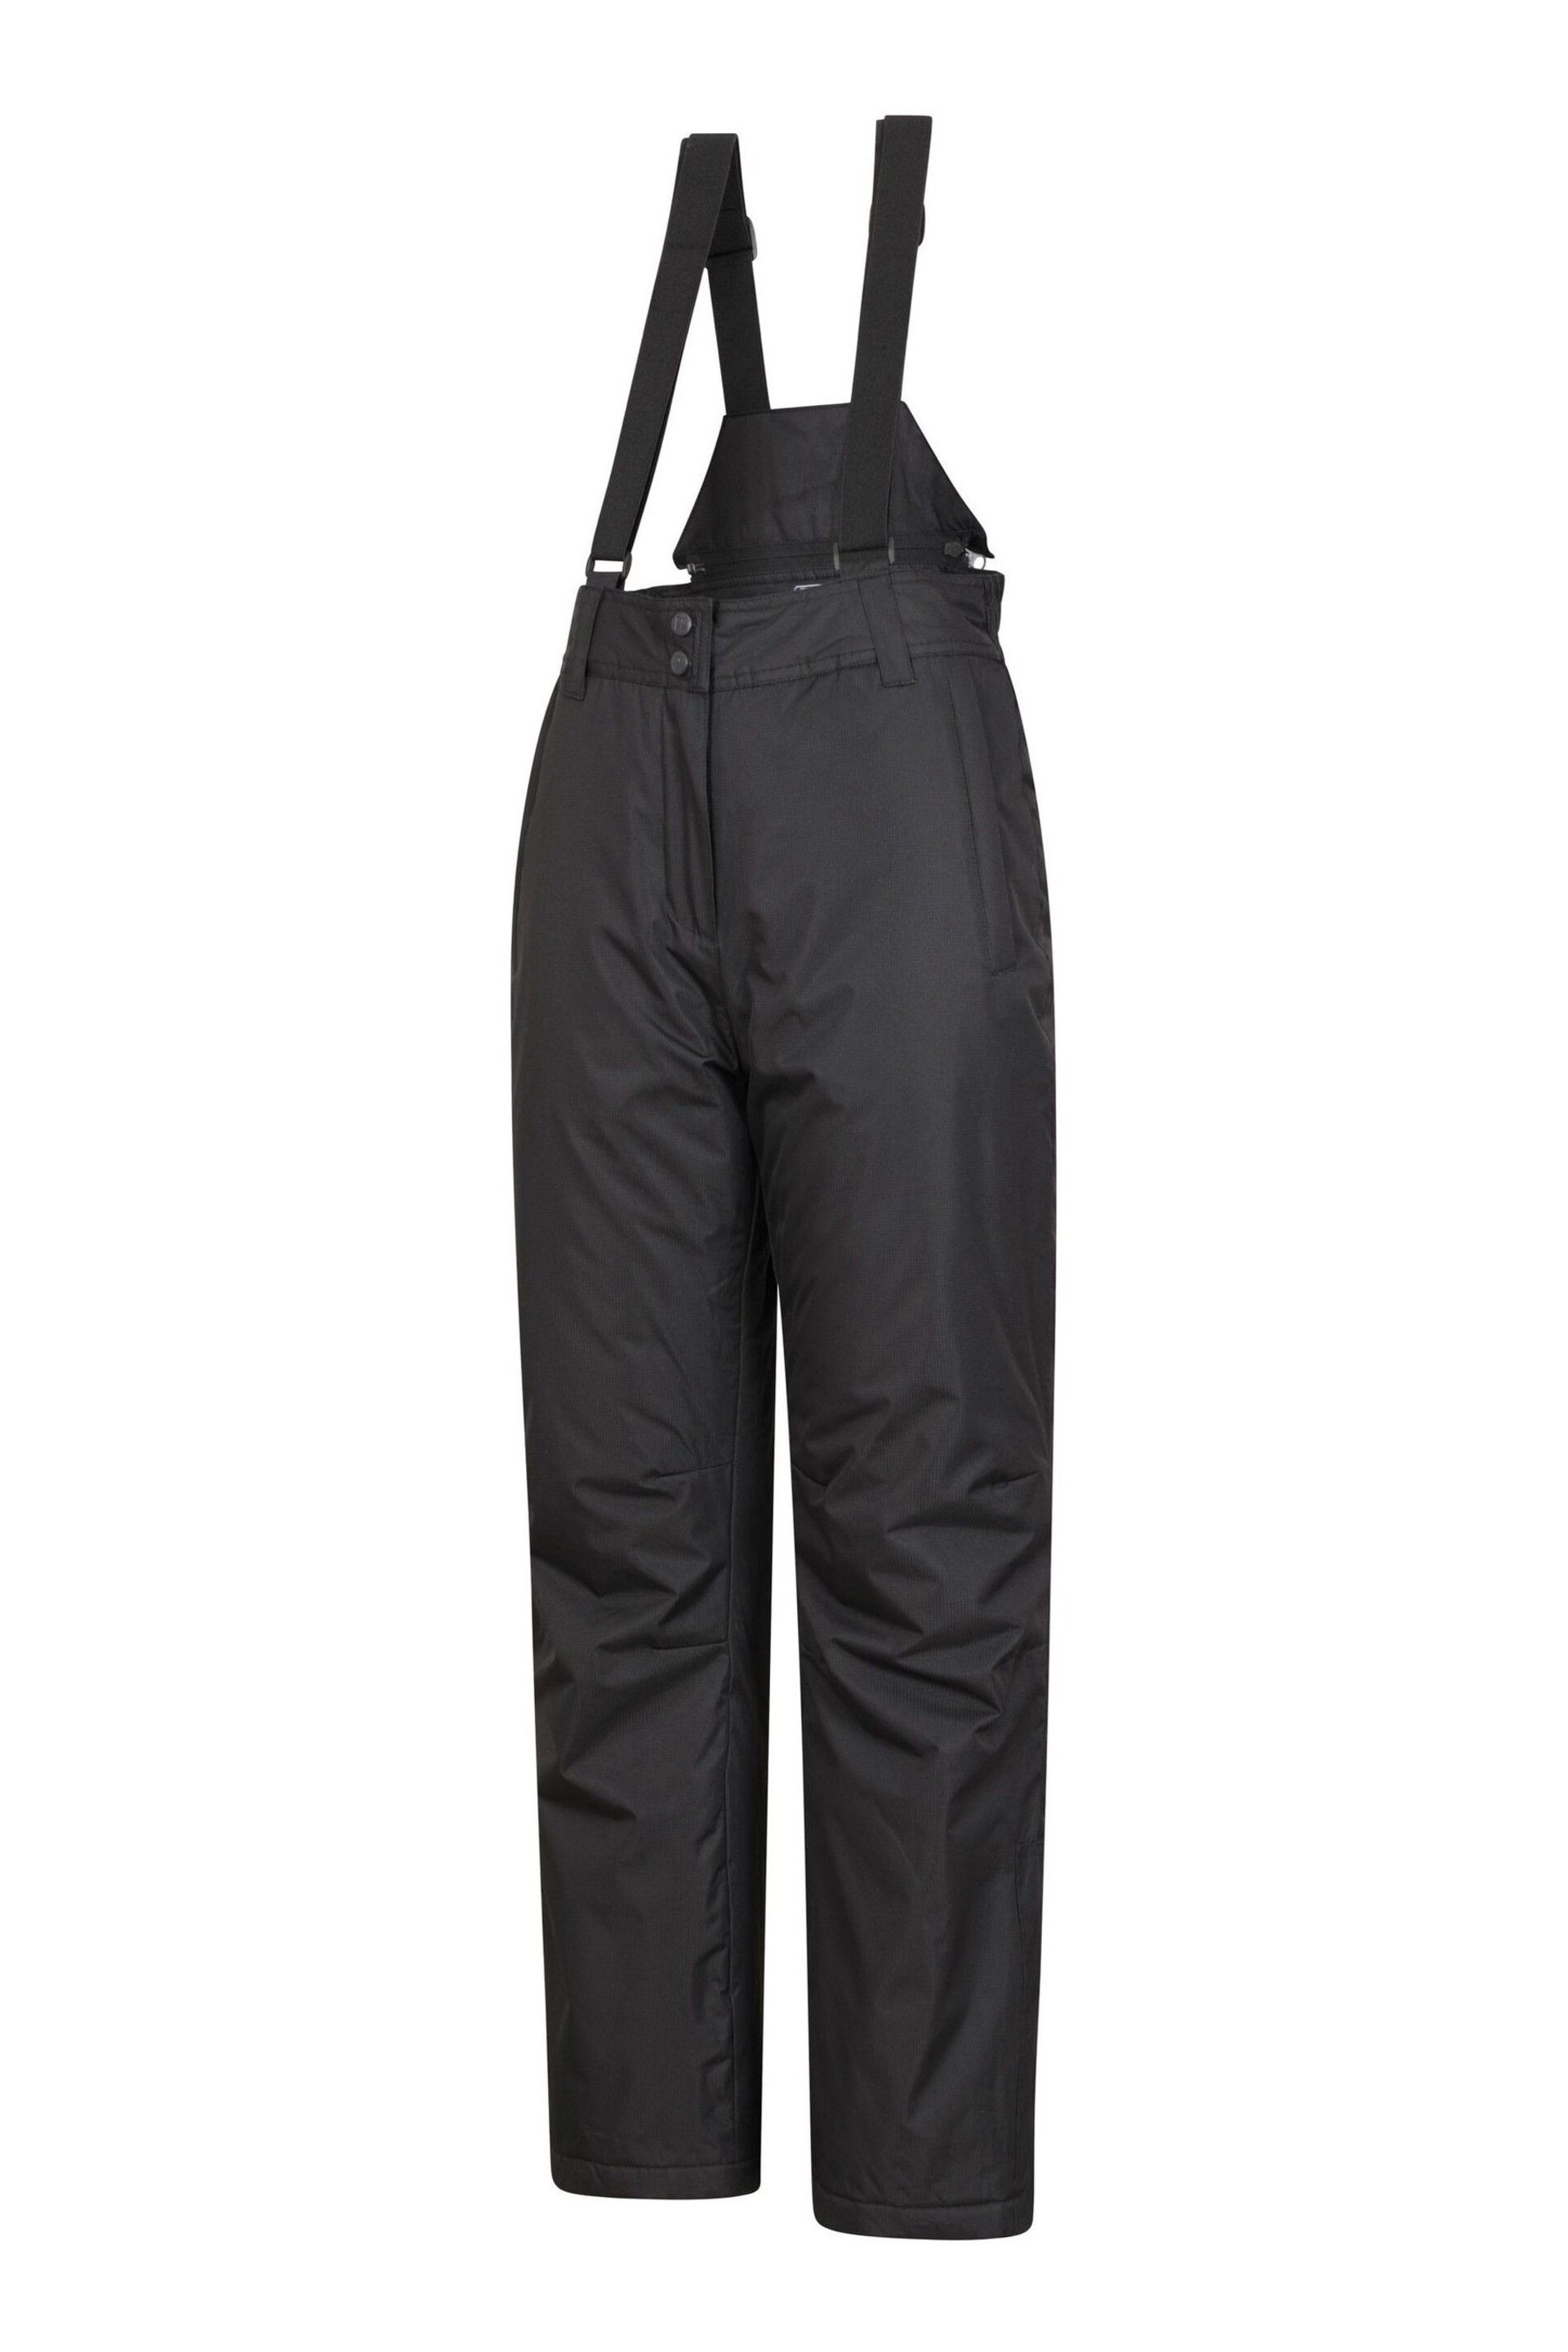 Mountain Warehouse Black Womens Moon Ski Trousers - Image 4 of 5